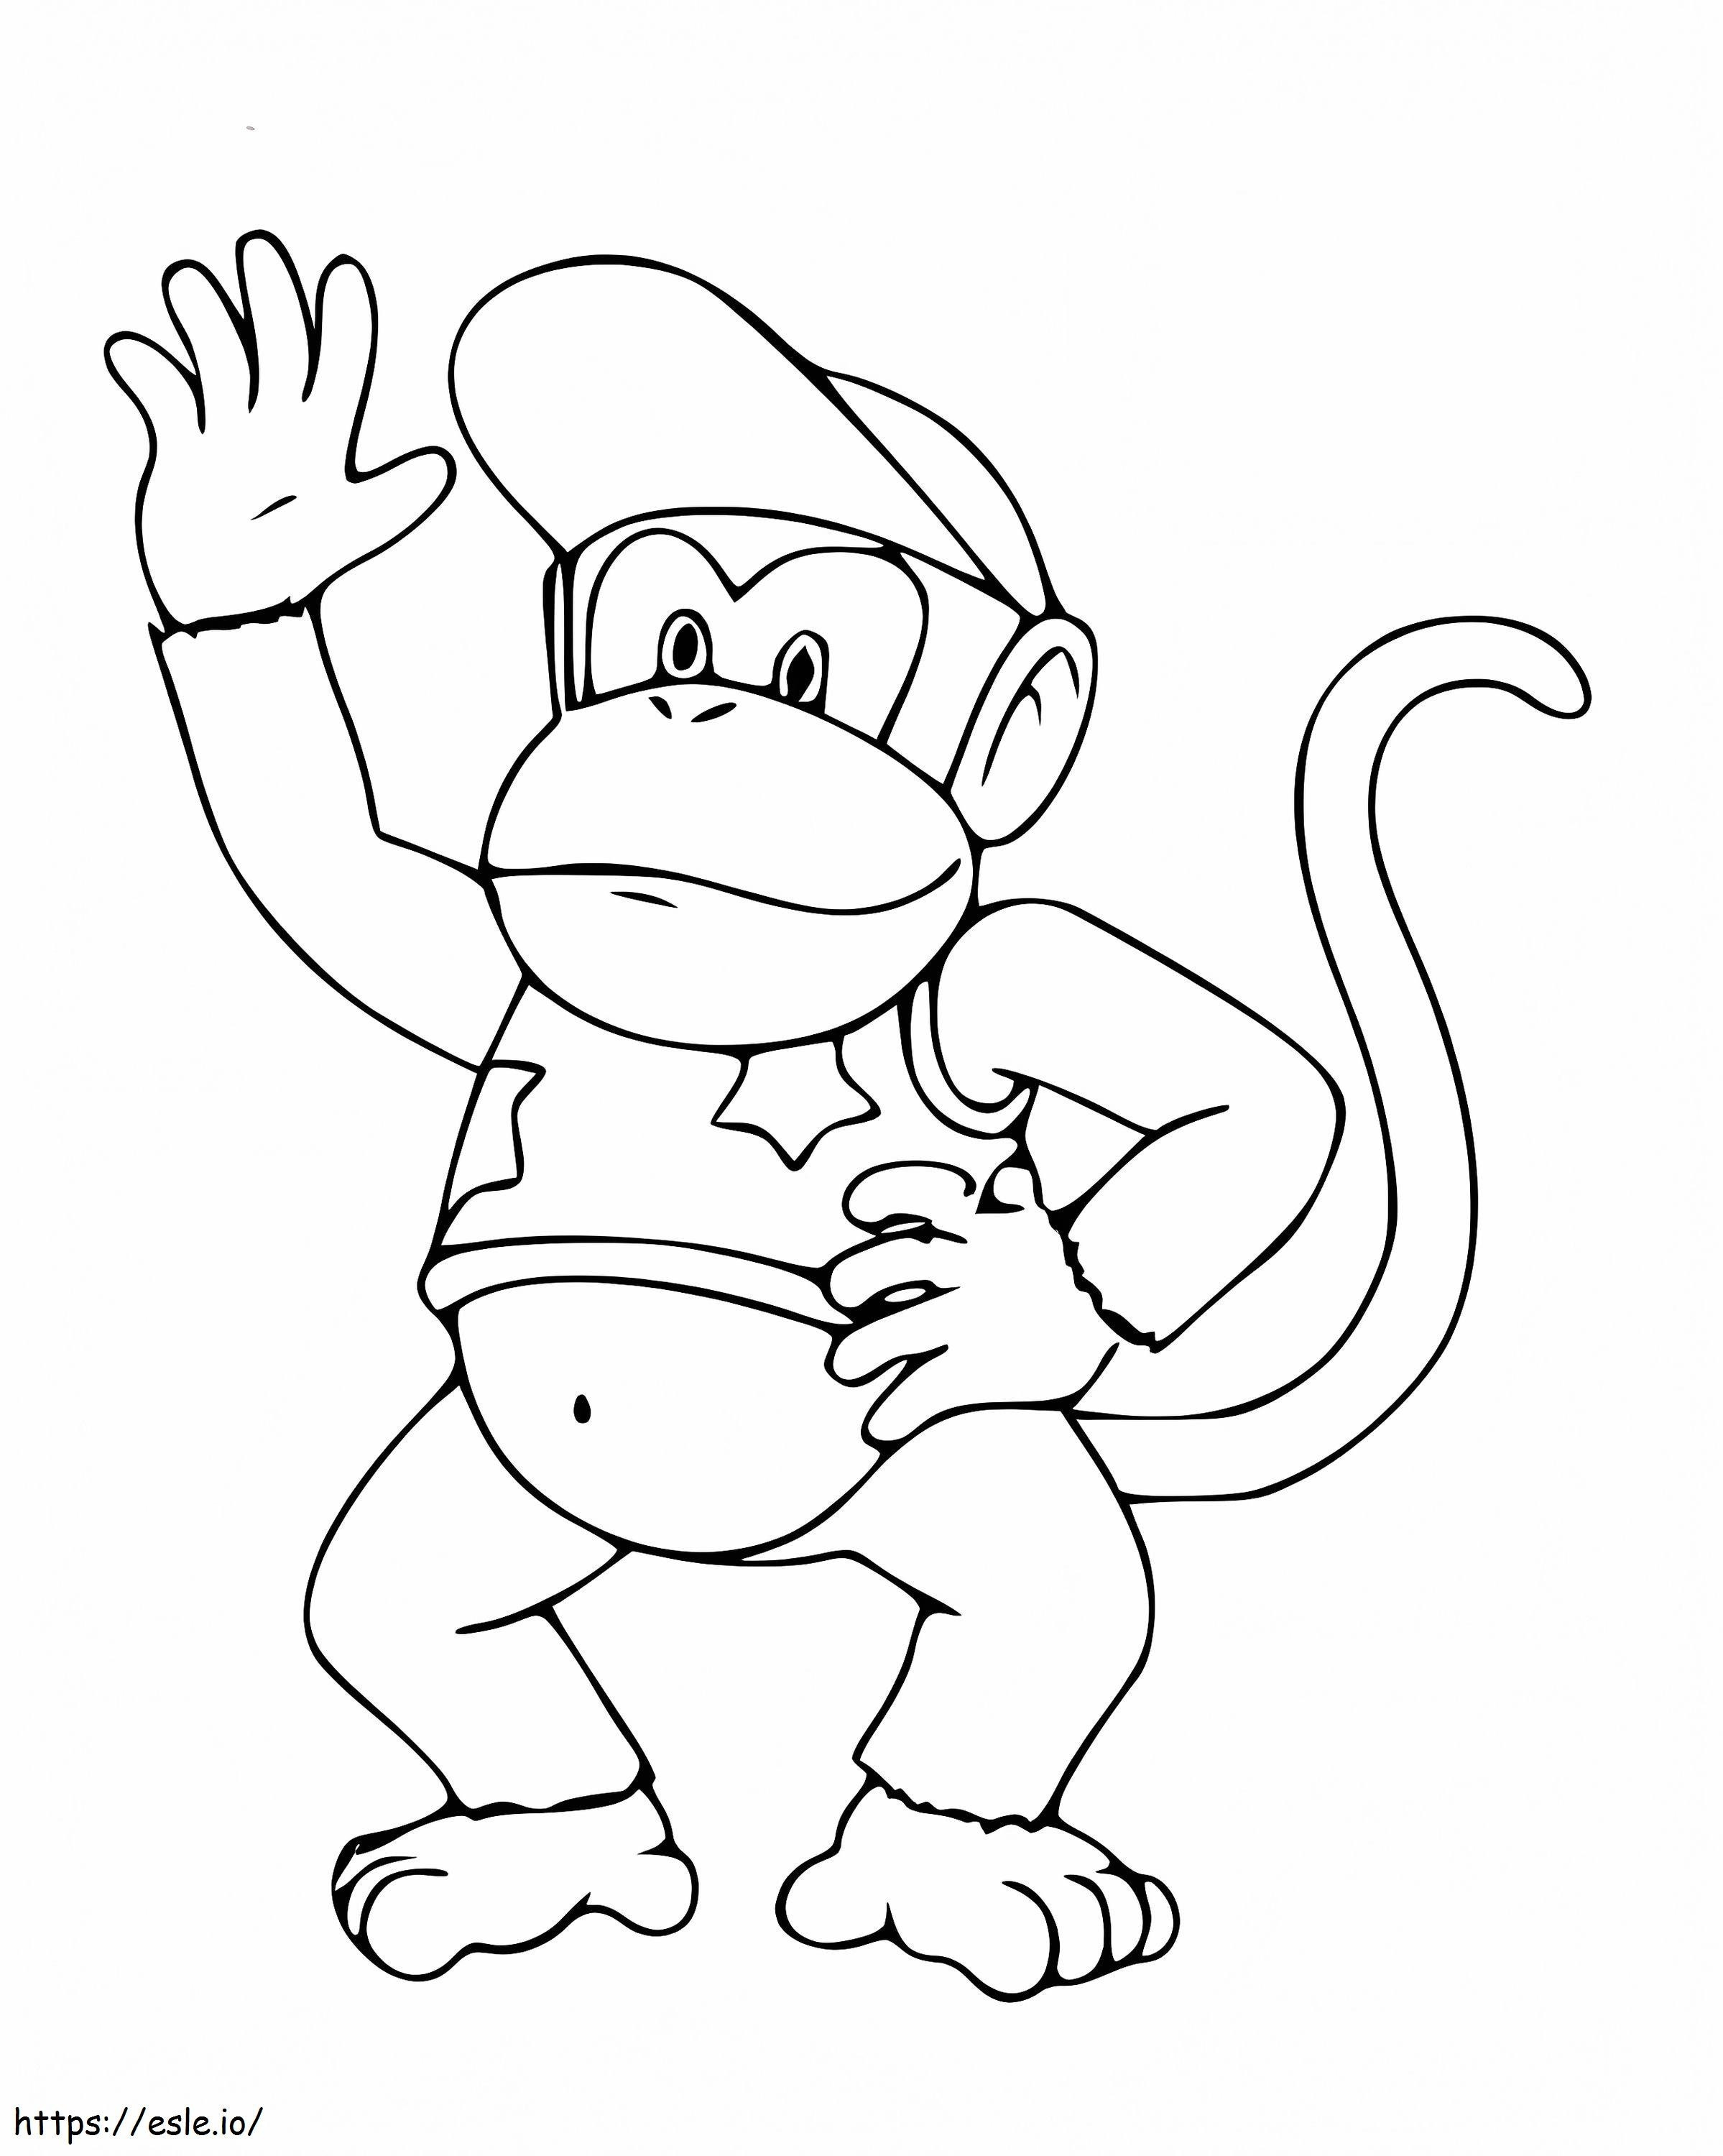 Diddy Kong Waving His Hand coloring page